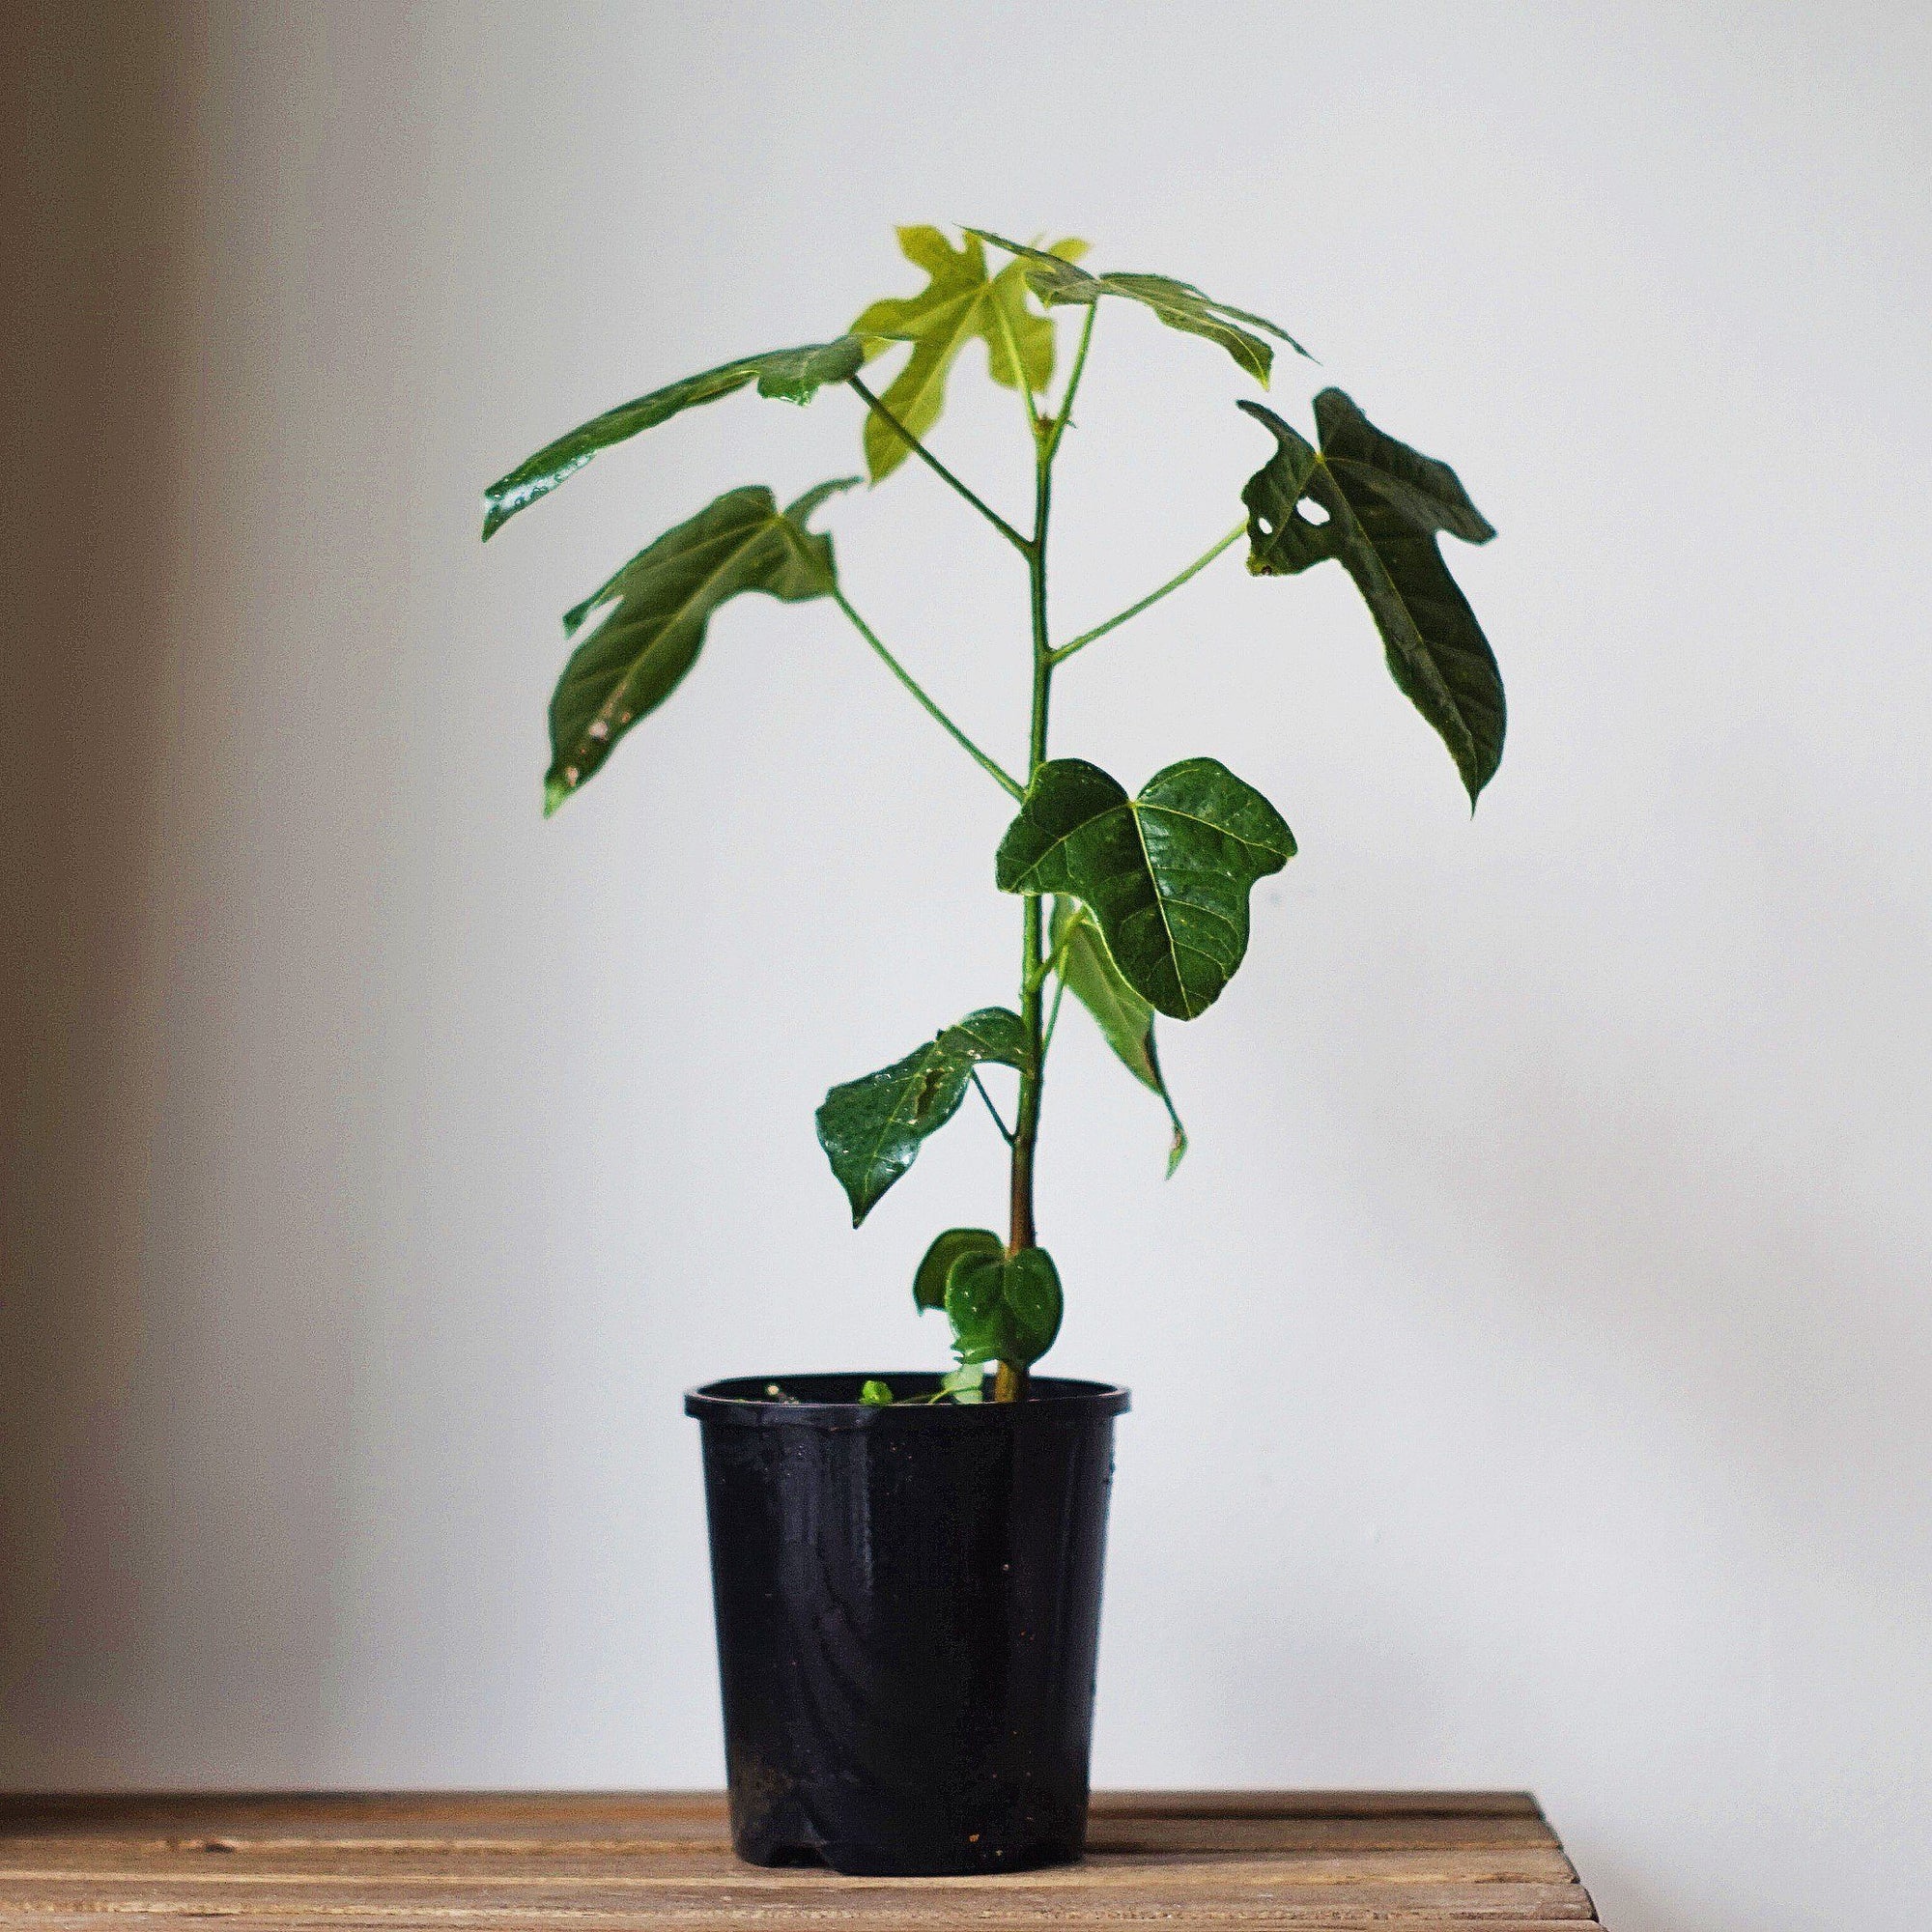 Kurrajong - How to grow a healthy plant